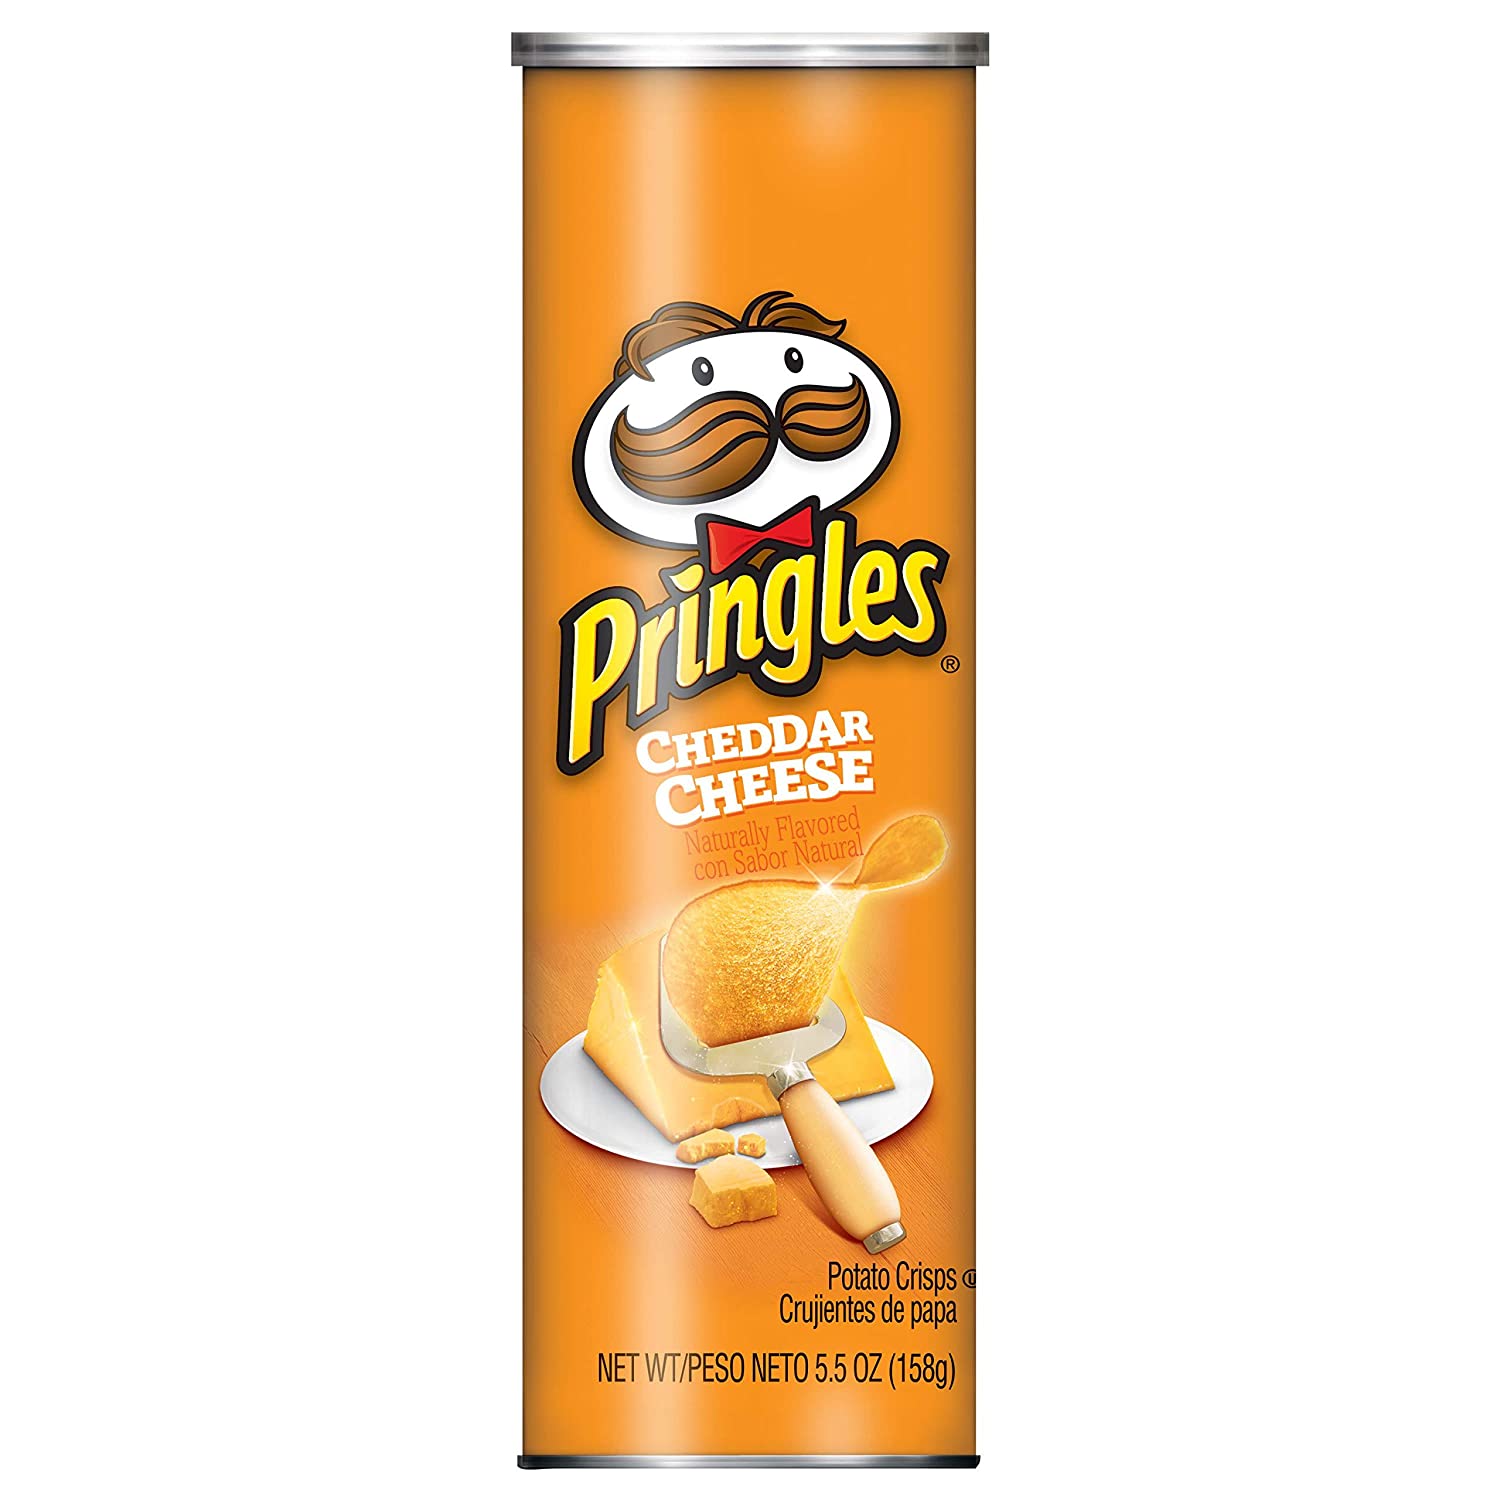 tha>Pringles - Cheese potato chips can